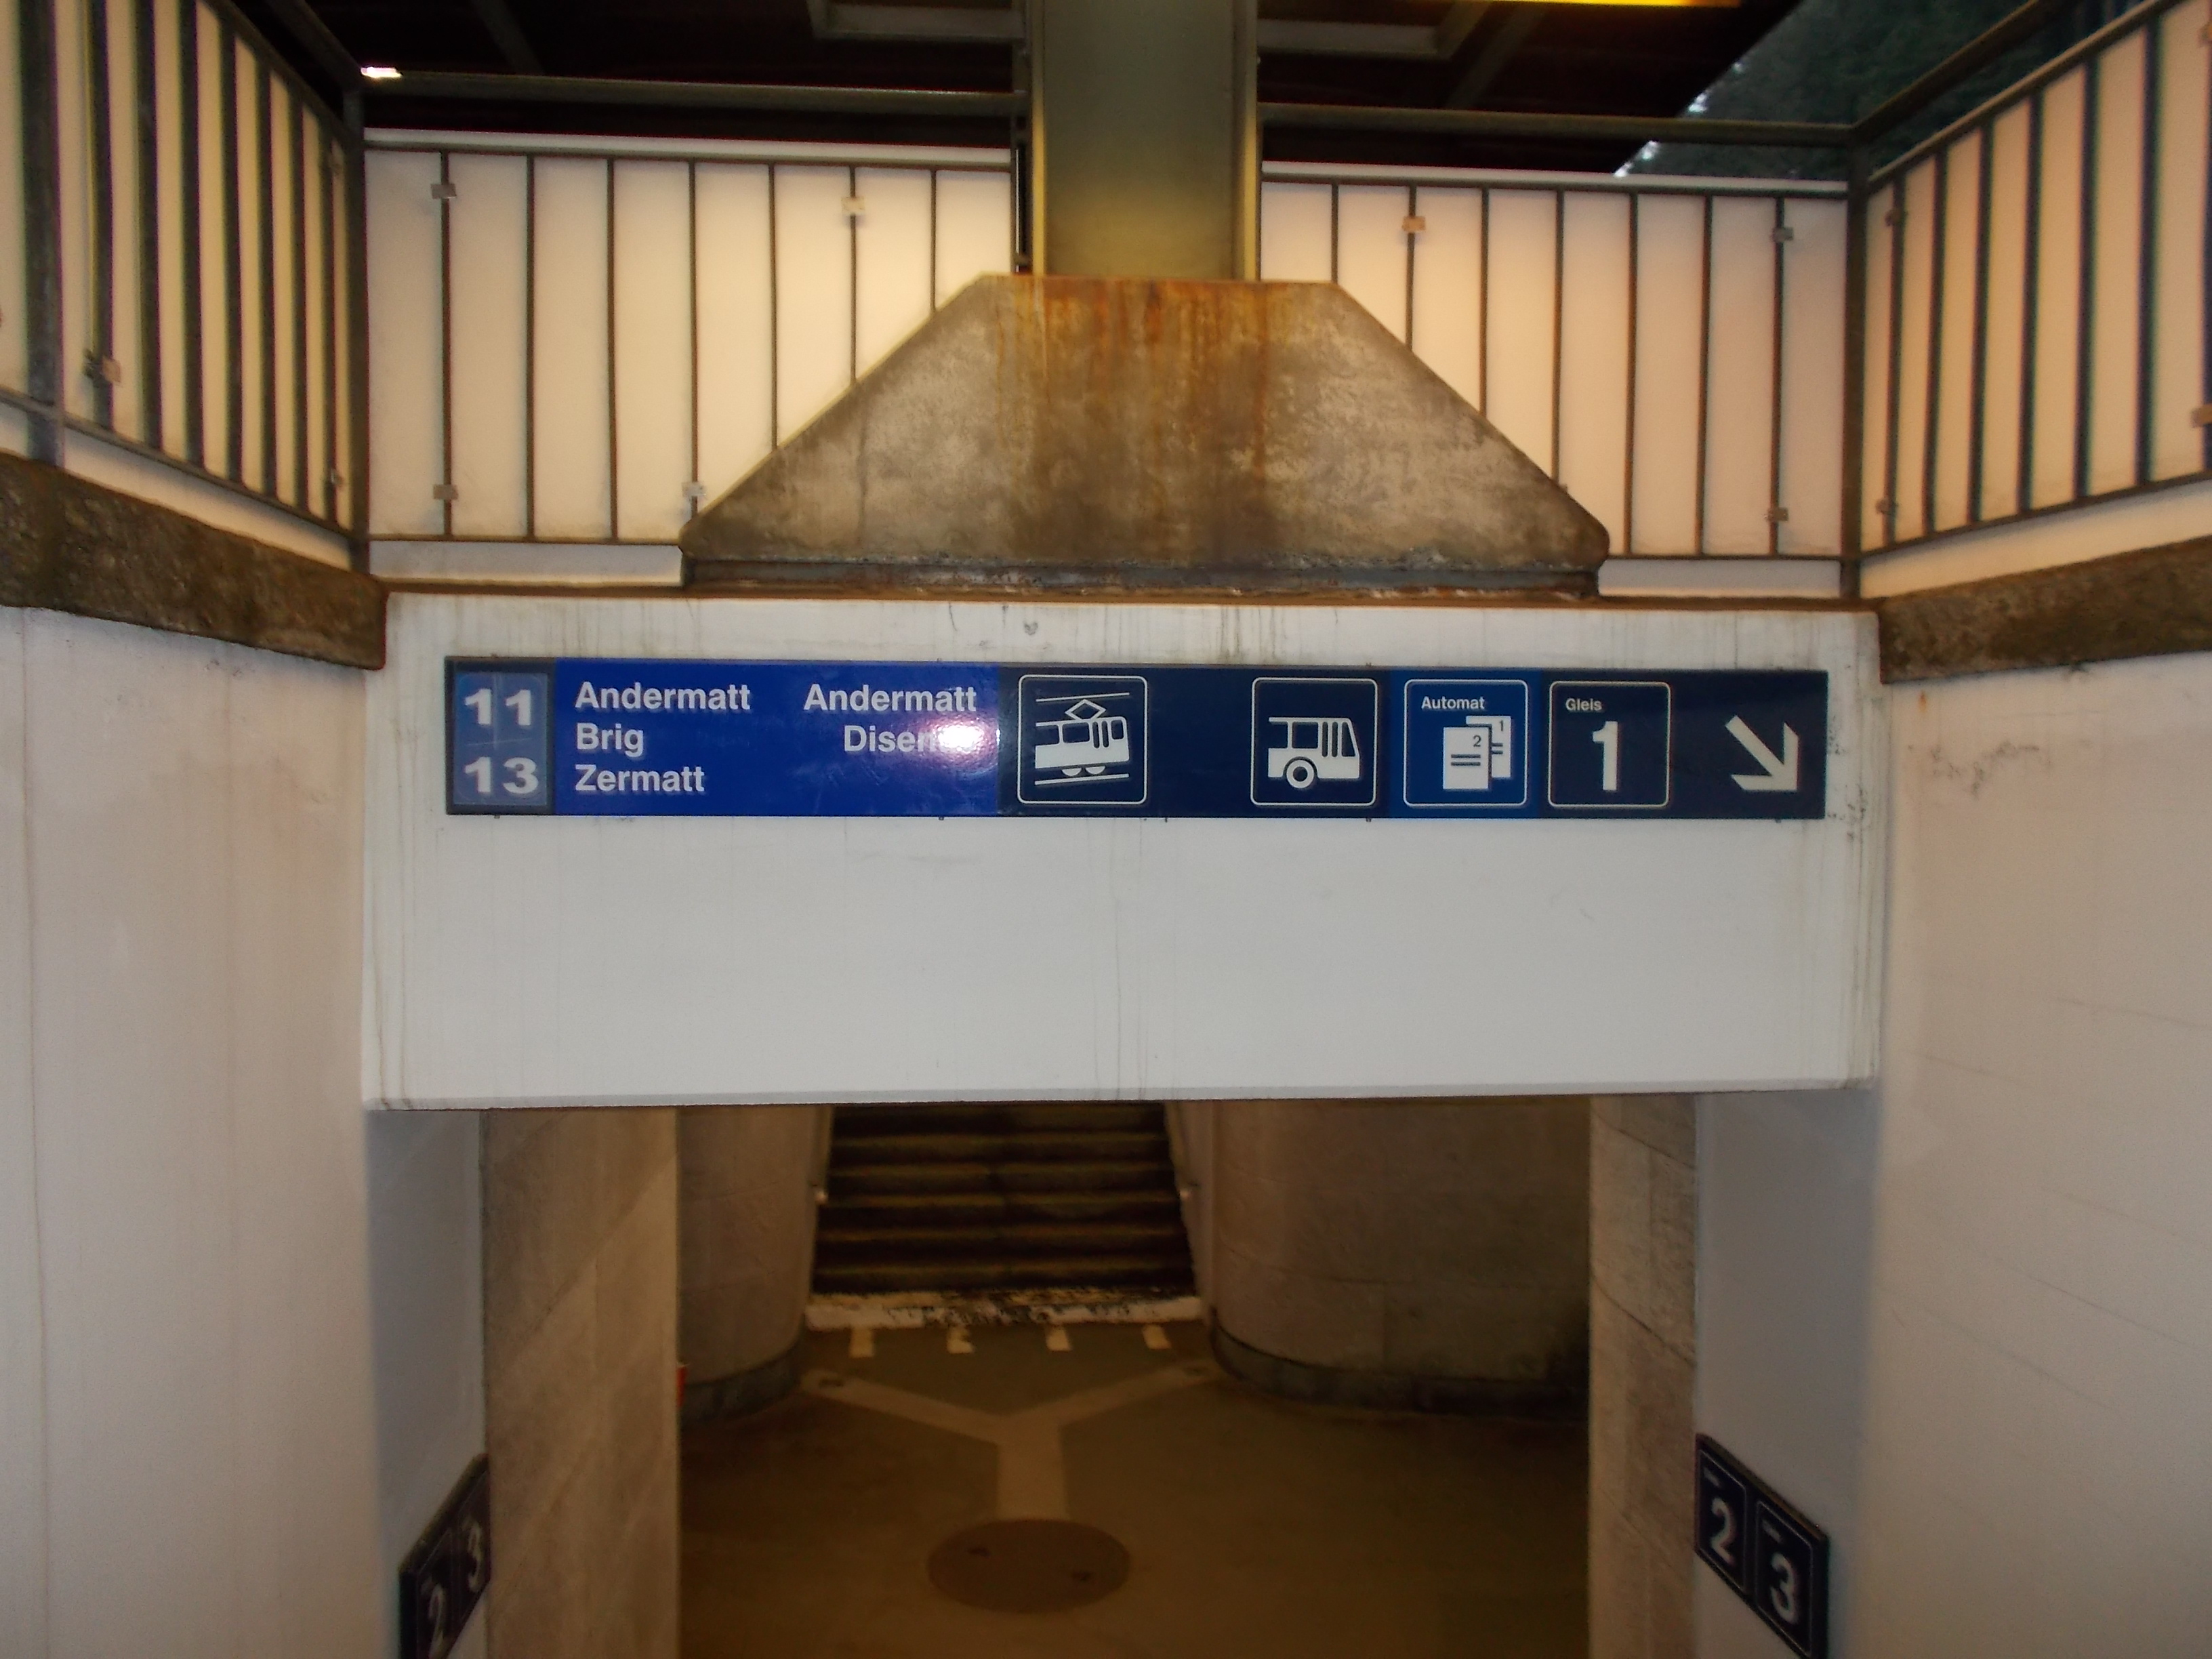 Platform stairs and signage at the Göschenen, Switzerland railway station on May 3, 2014.